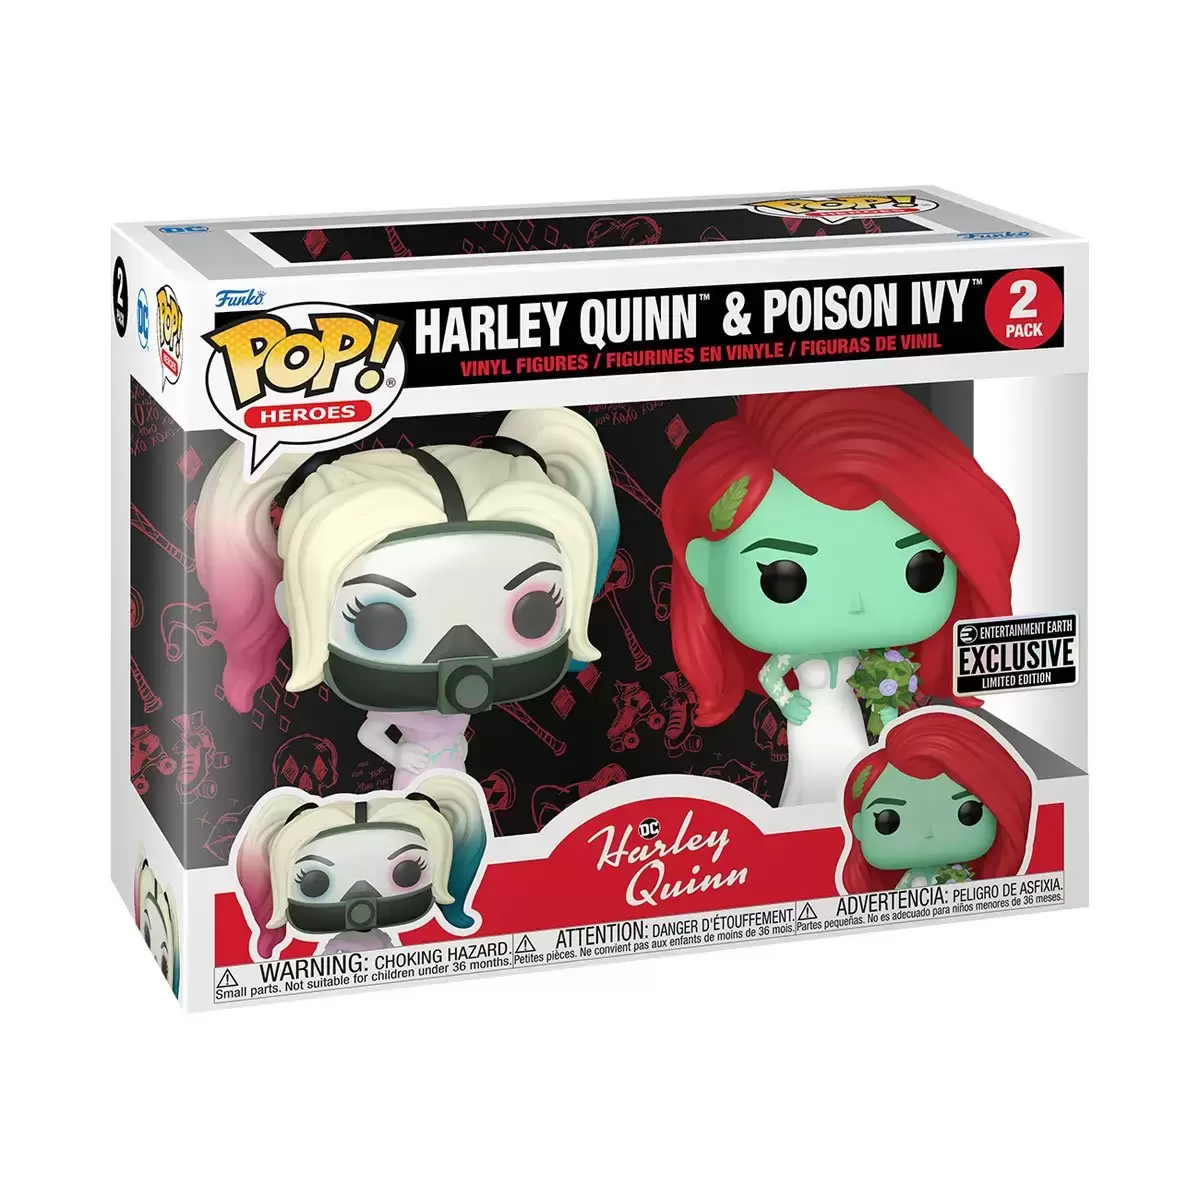 POP! Heroes - Harley Quinn - Harley Quinn & Poison Ivy 2 Pack